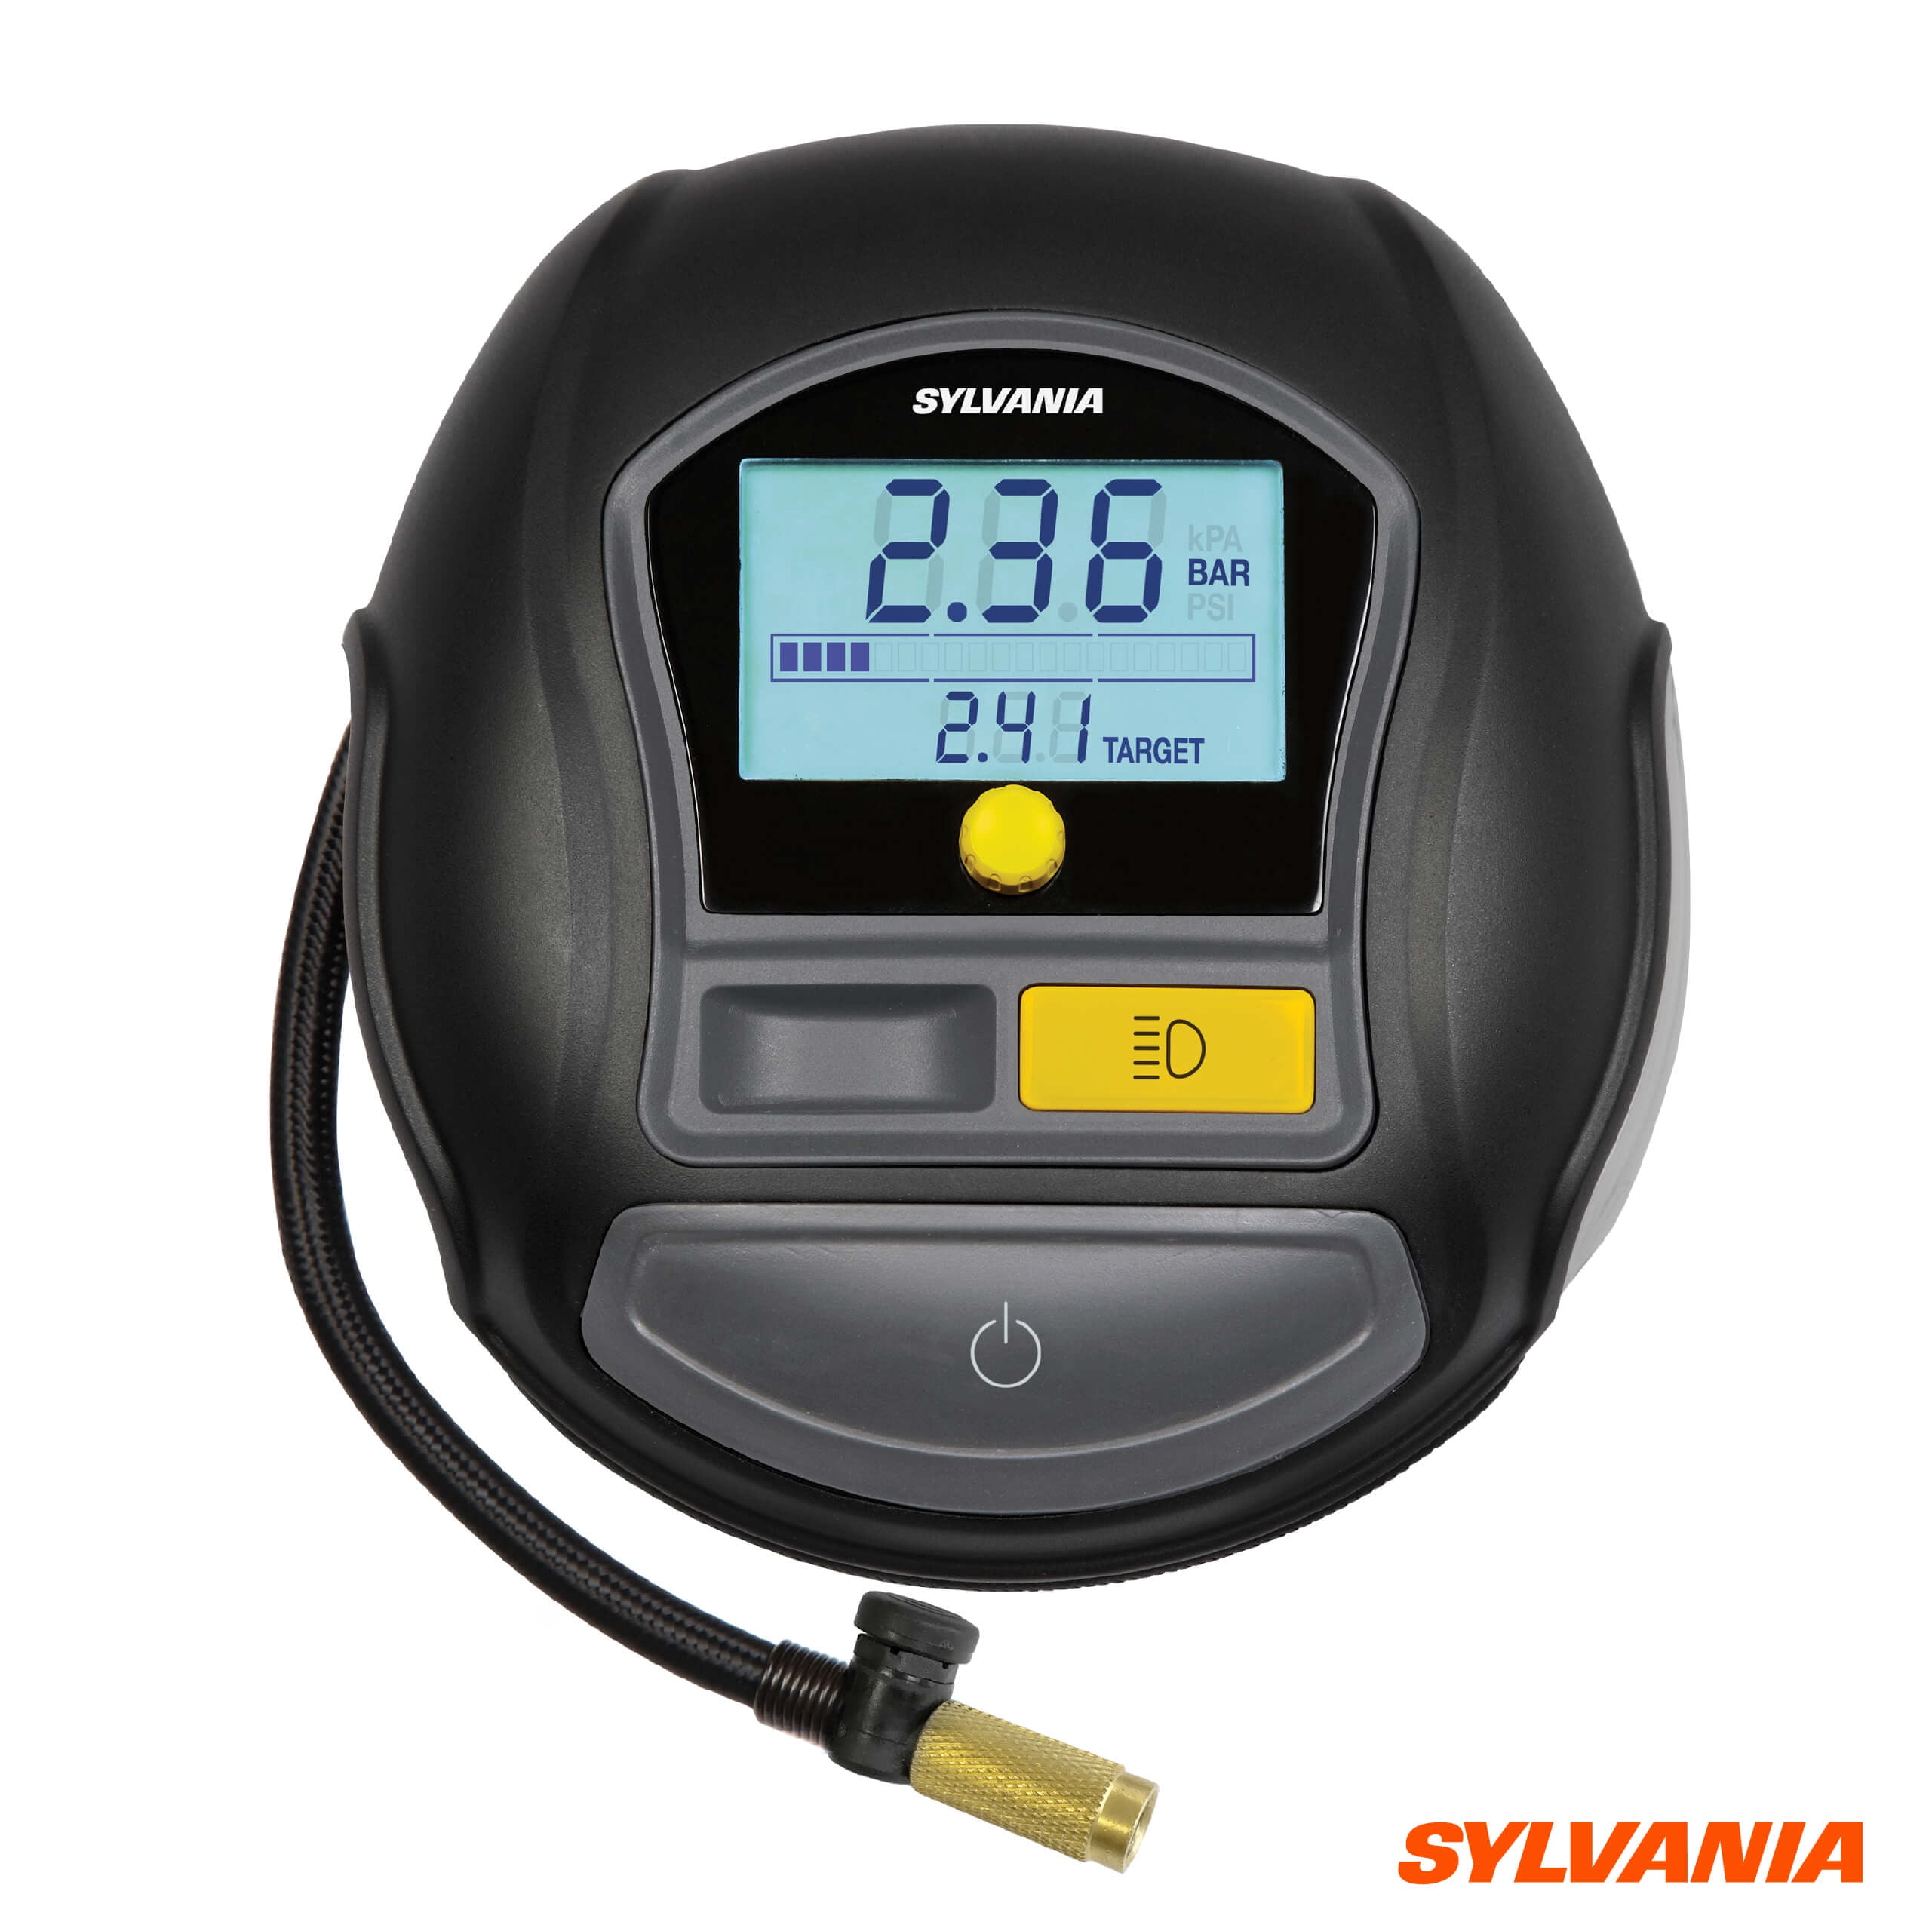 Sylvania Rapid Portable Tire Inflator w/ Auto Stop LED Digital Display Open Box 